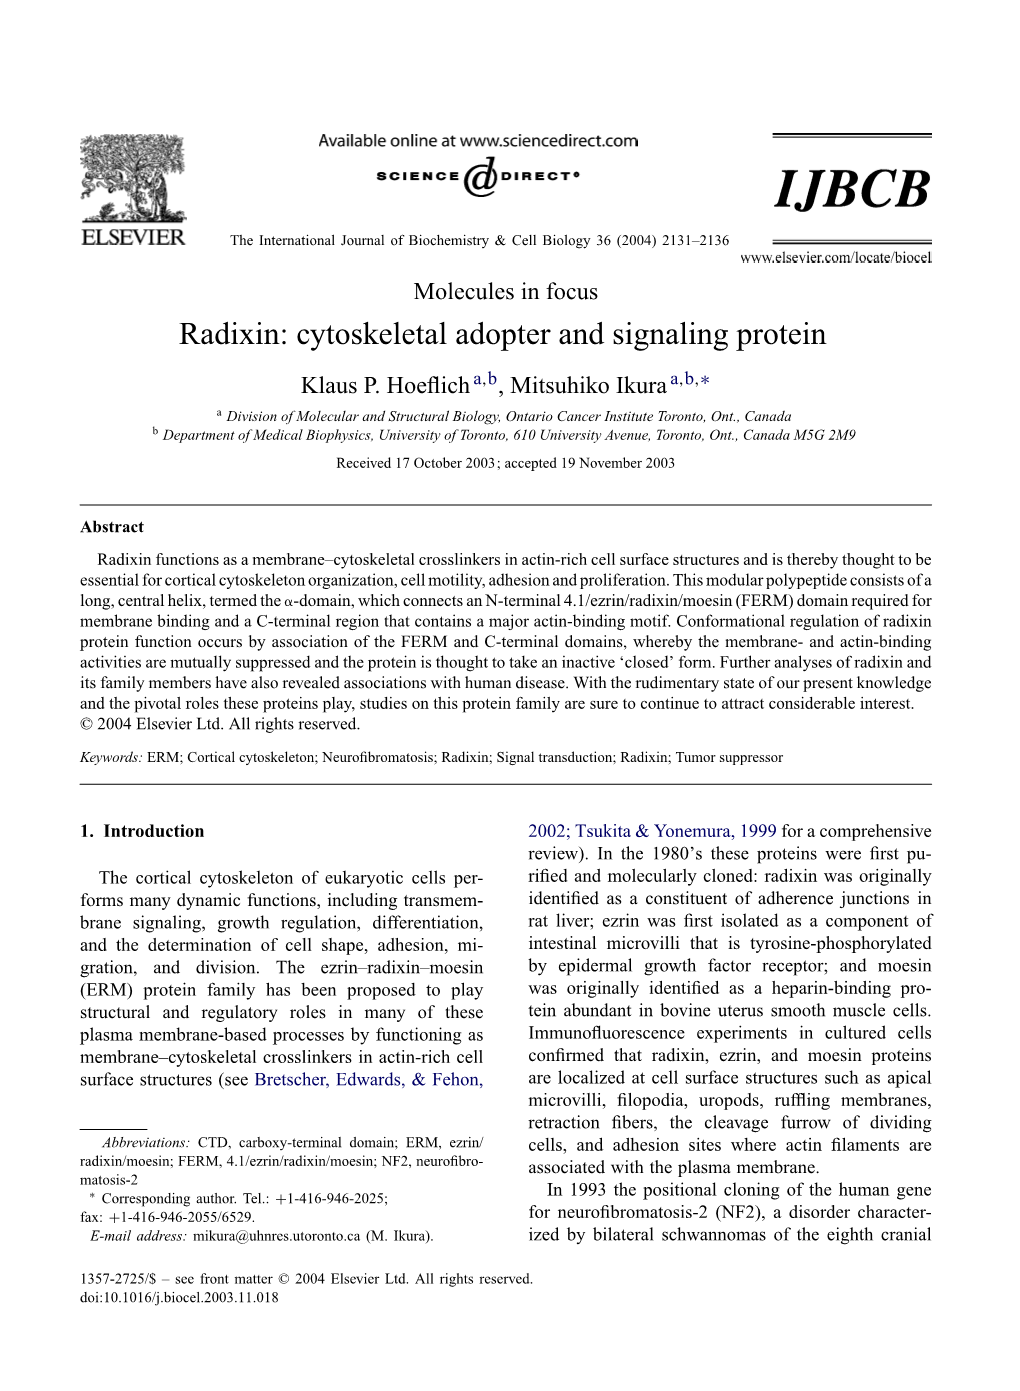 Radixin: Cytoskeletal Adopter and Signaling Protein Klaus P